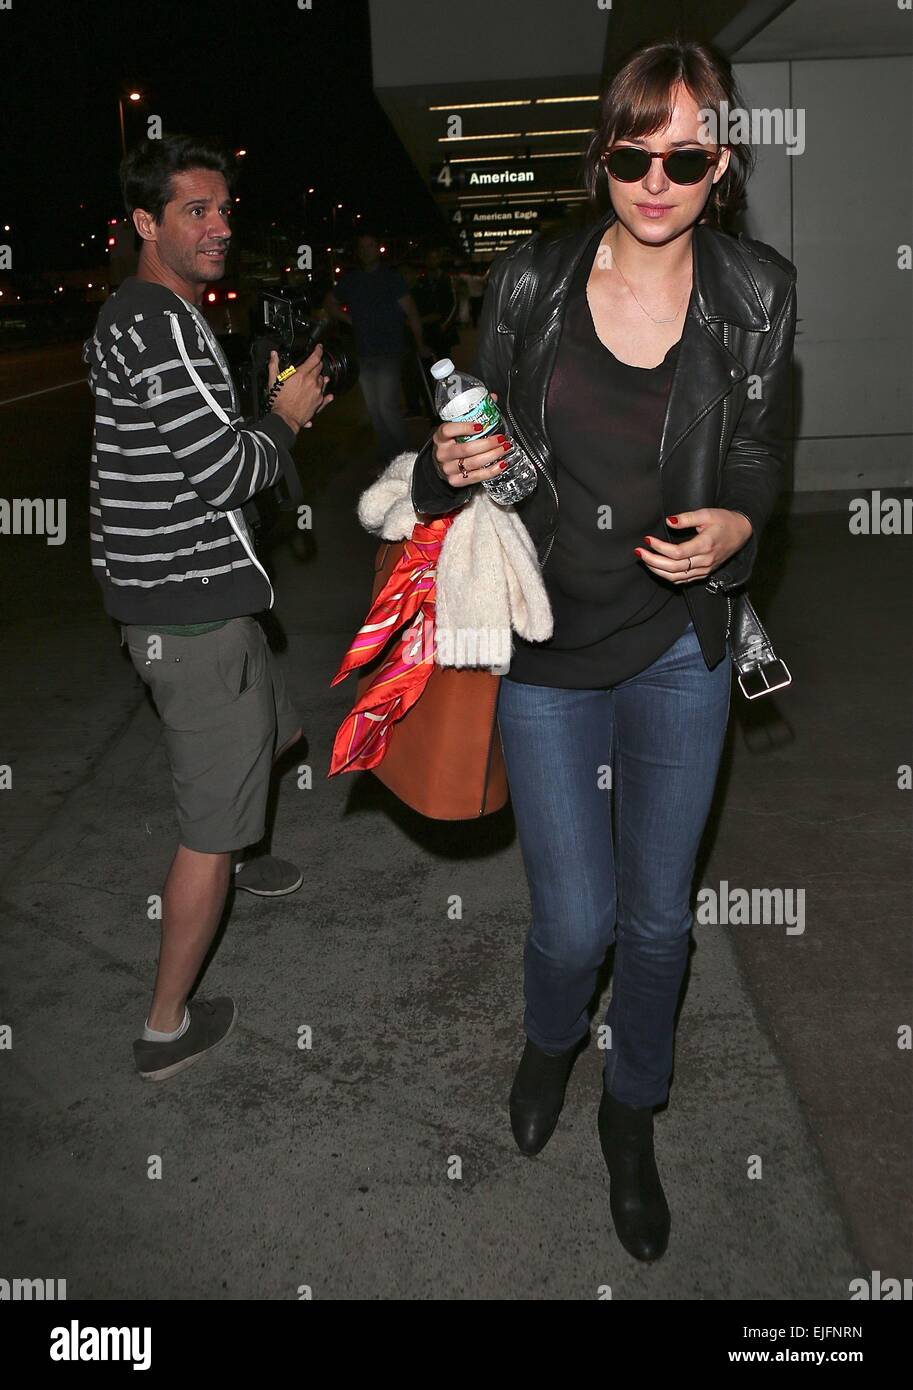 Dakota Johnson arrives at Los Angeles International (LAX) airport Featuring: Dakota Johnson Where: Los Angeles, California, United States When: 21 Sep 2014 Stock Photo